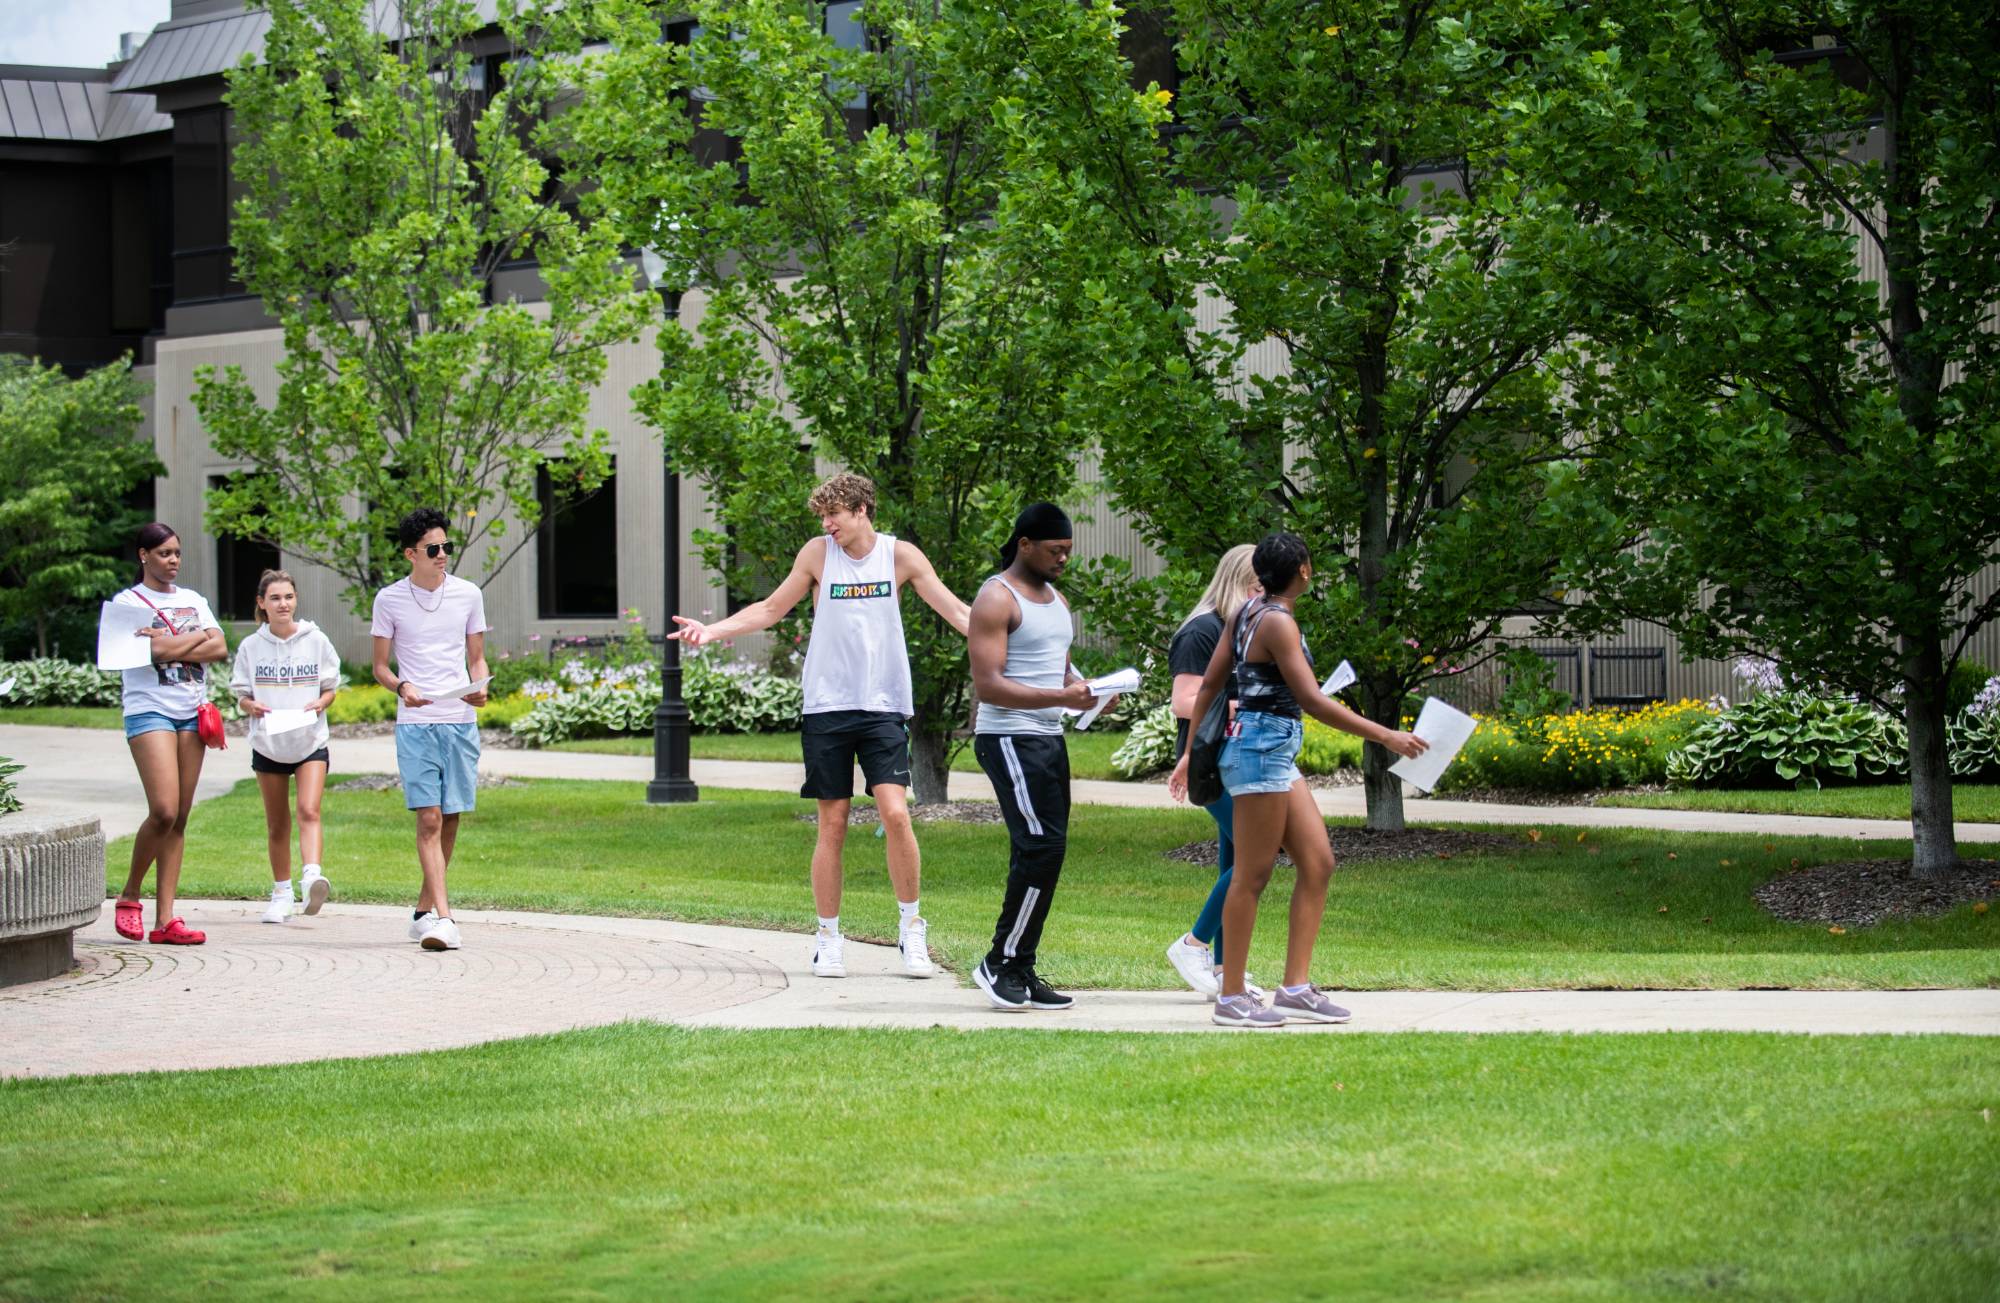 GVSU Student Seeks to Raise $39,000 for Kids Over Summer Break